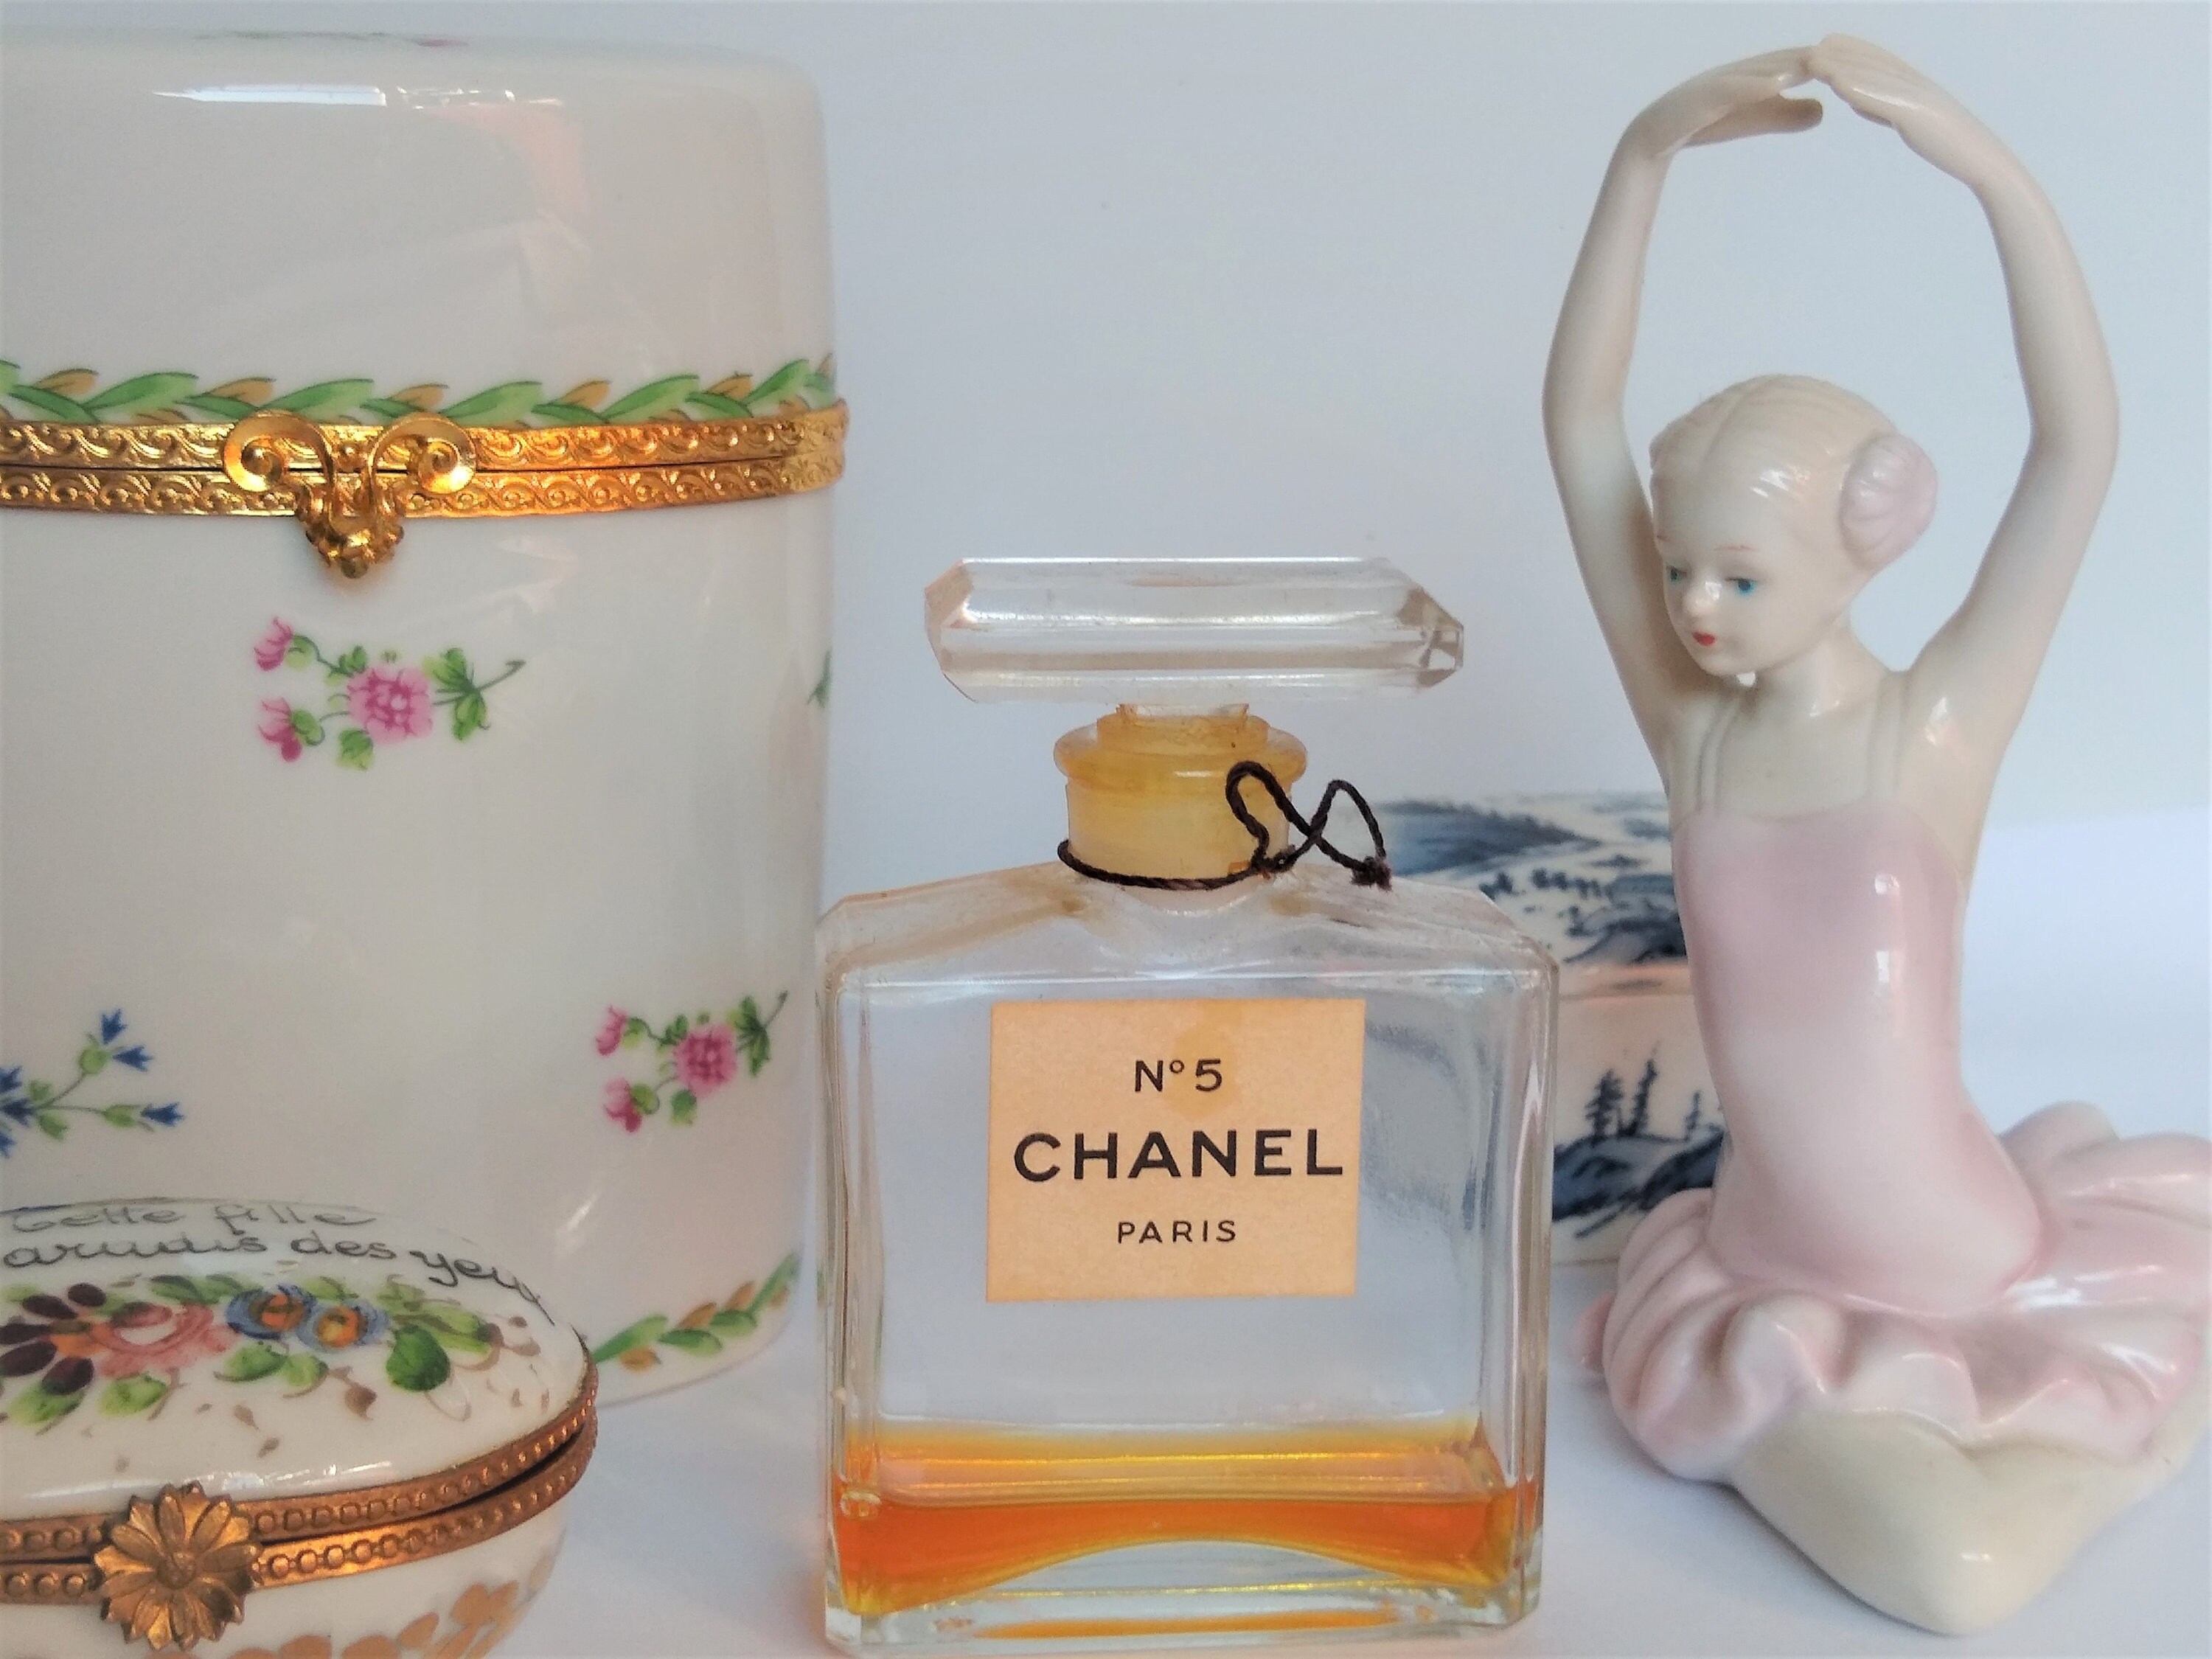 Chanel No. 5 Small Perfume Bottle